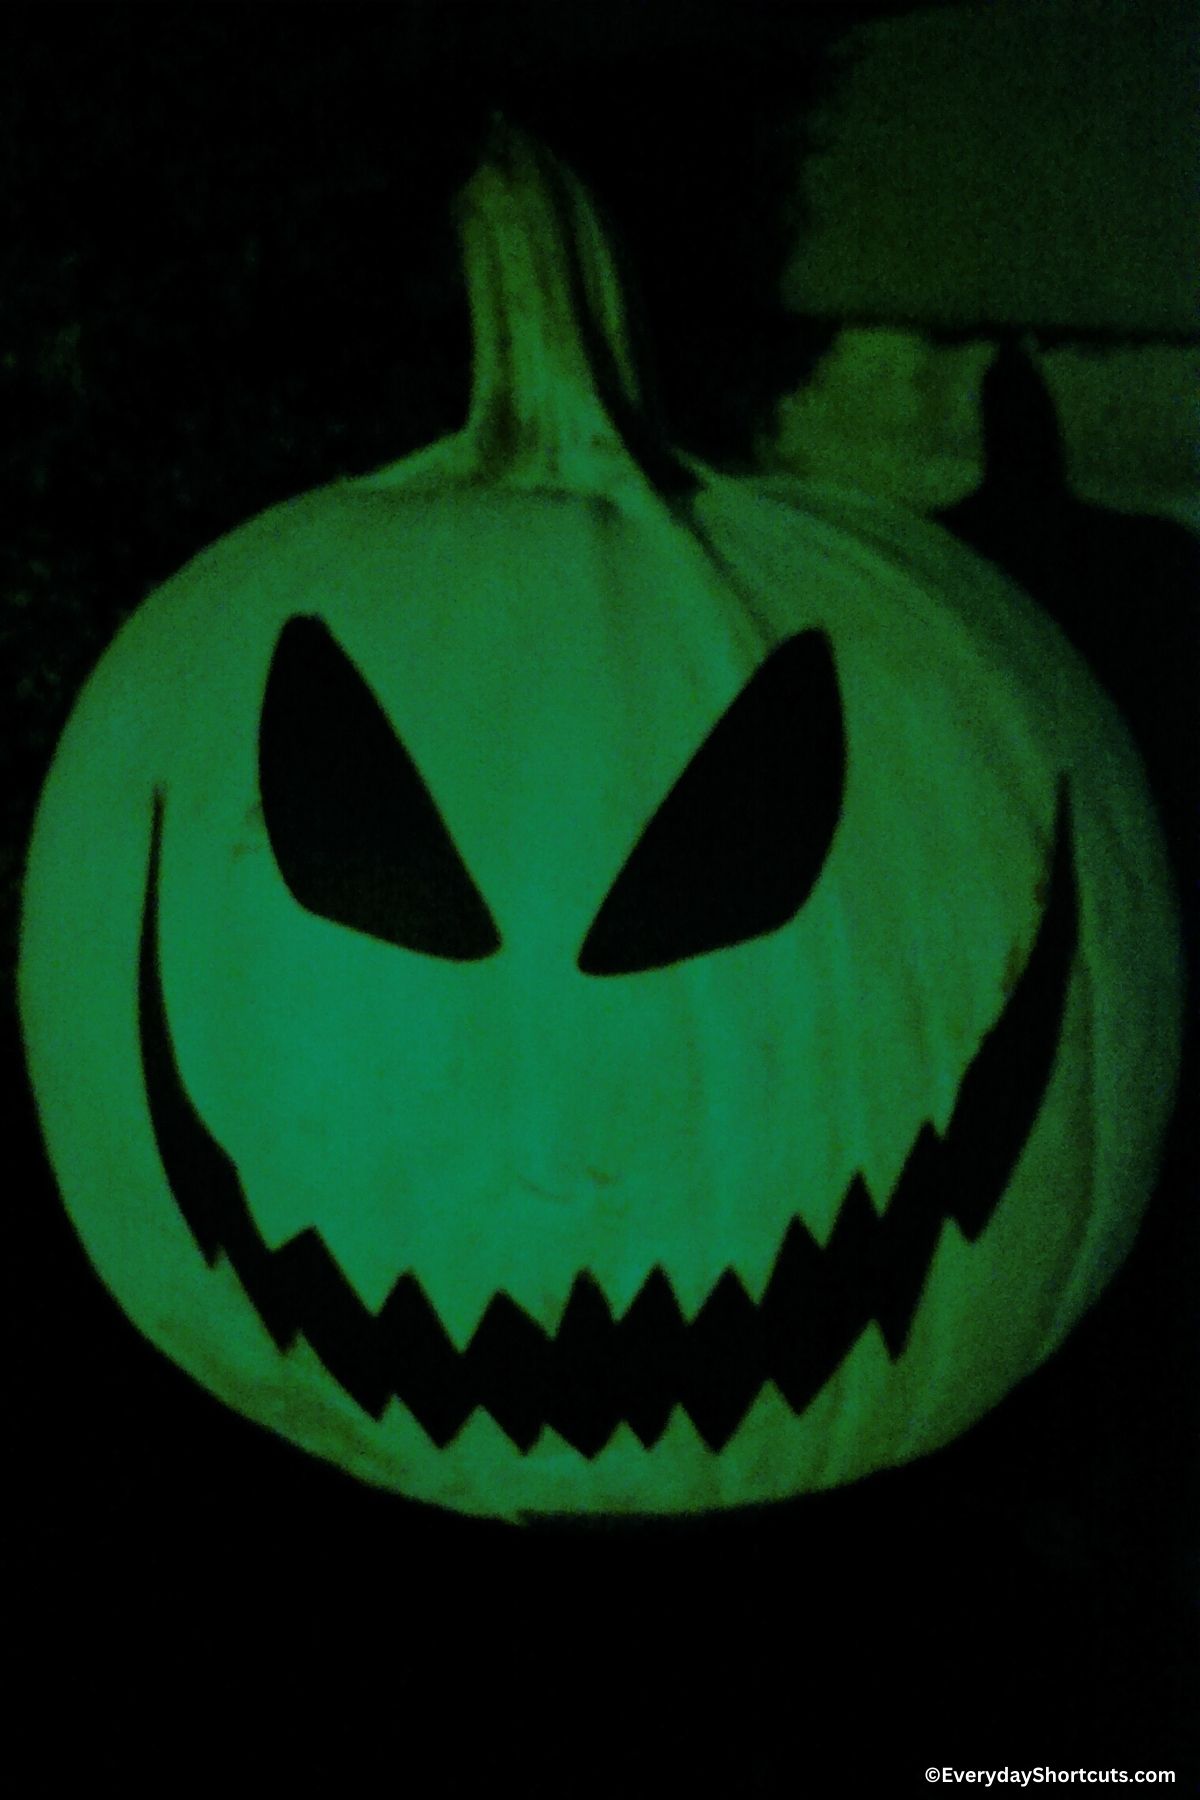 spray painted pumpkin with glow in the dark spray paint